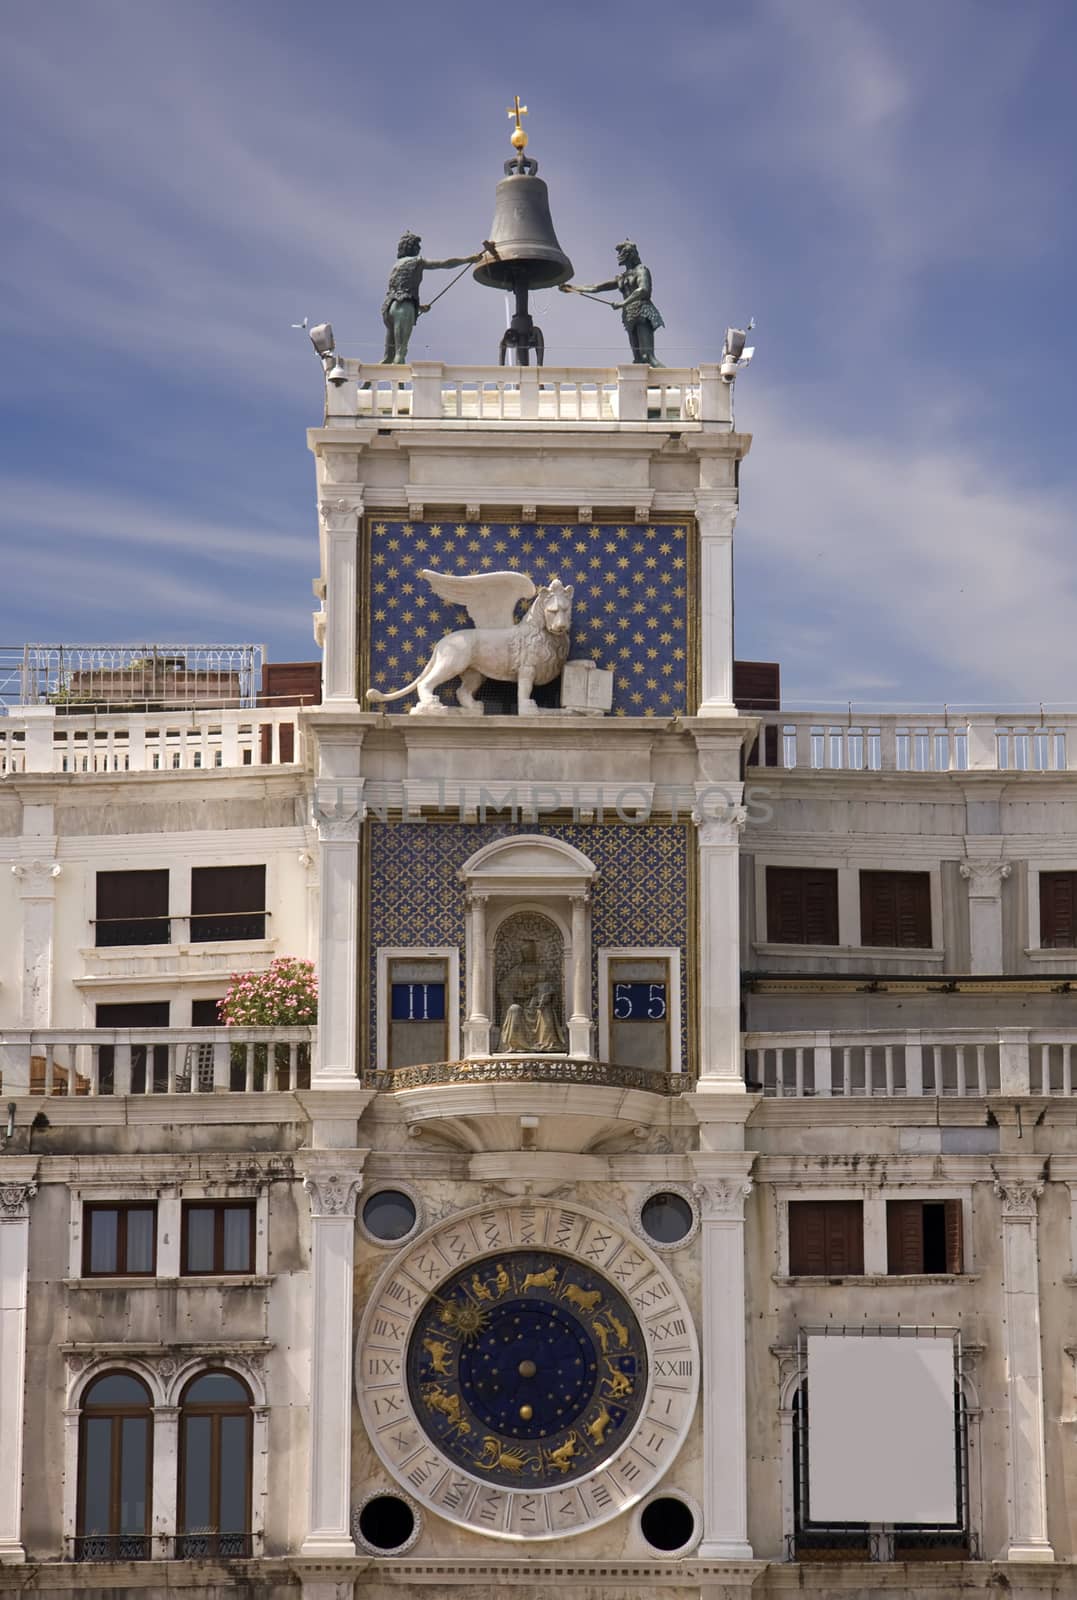 24hr clock face on a building in Venice by fotoecho